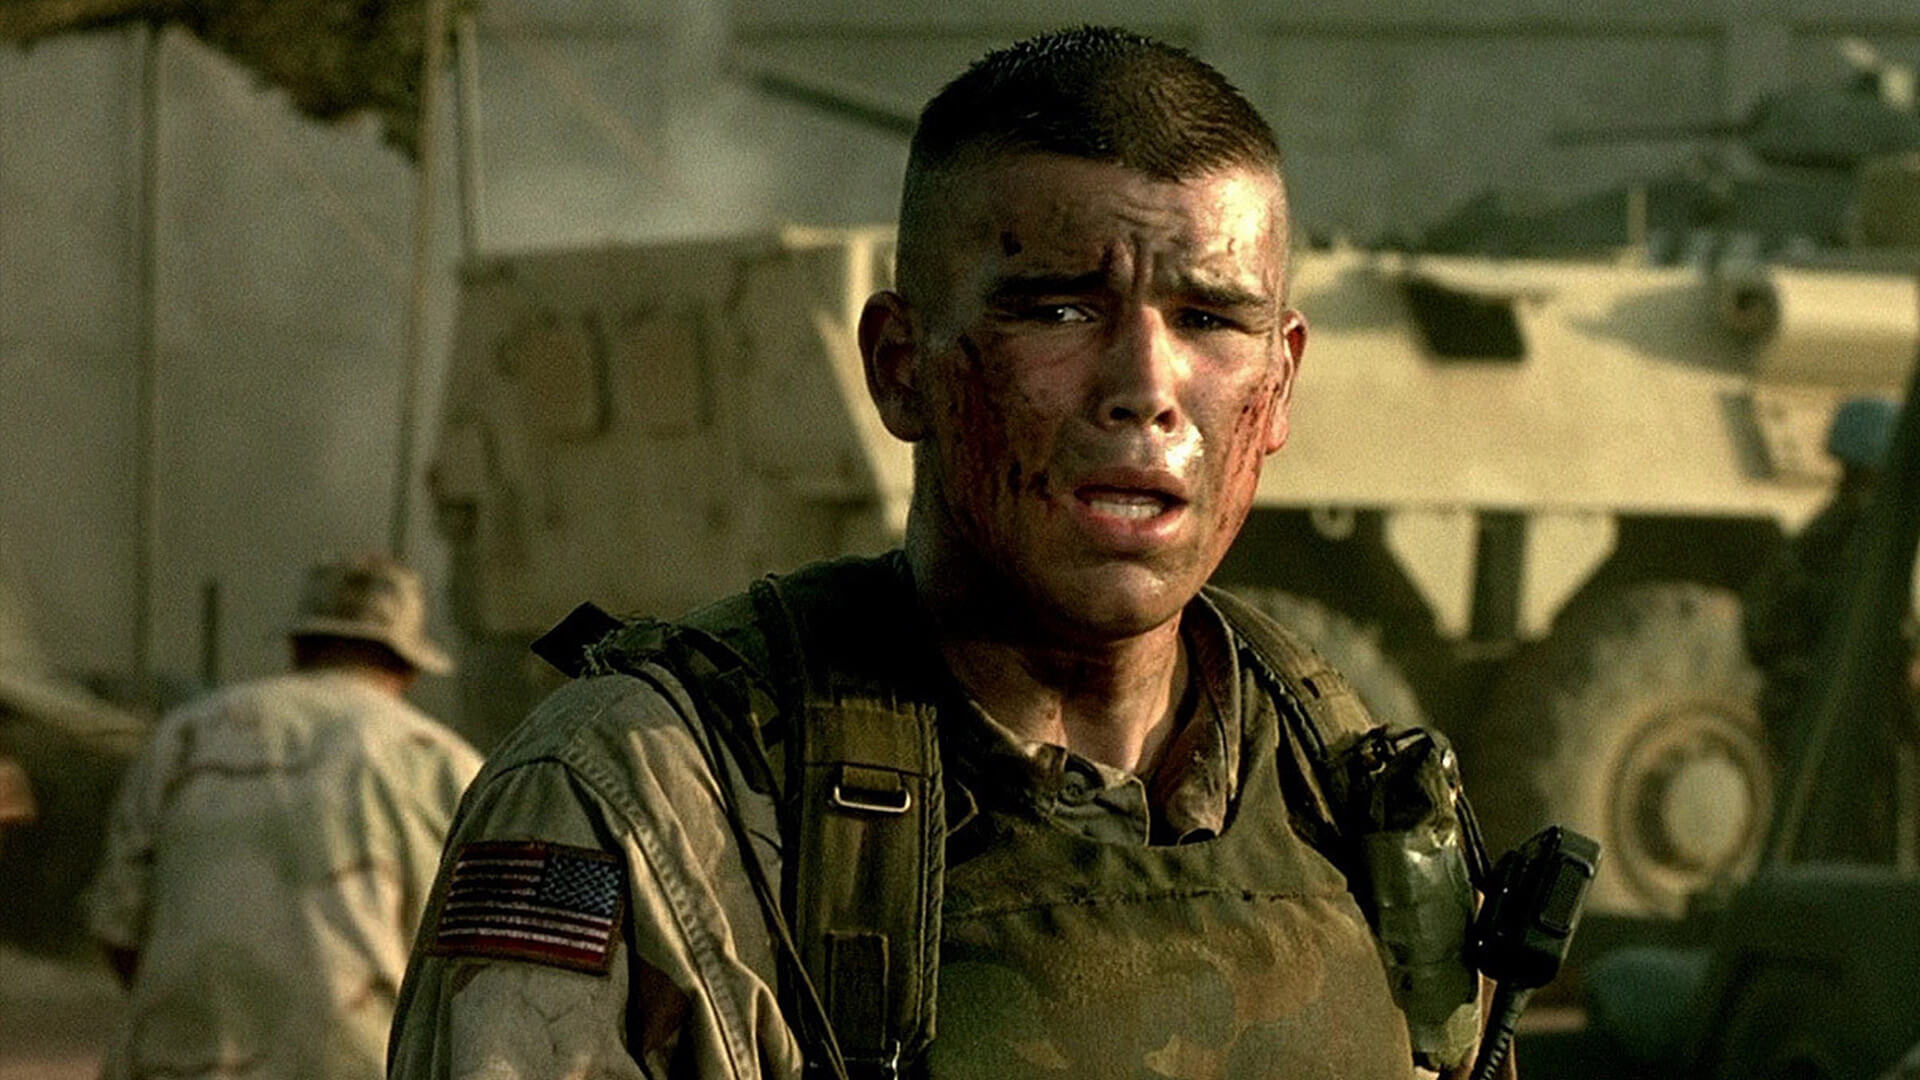 Is Black Hawk Down Based on a True Story?